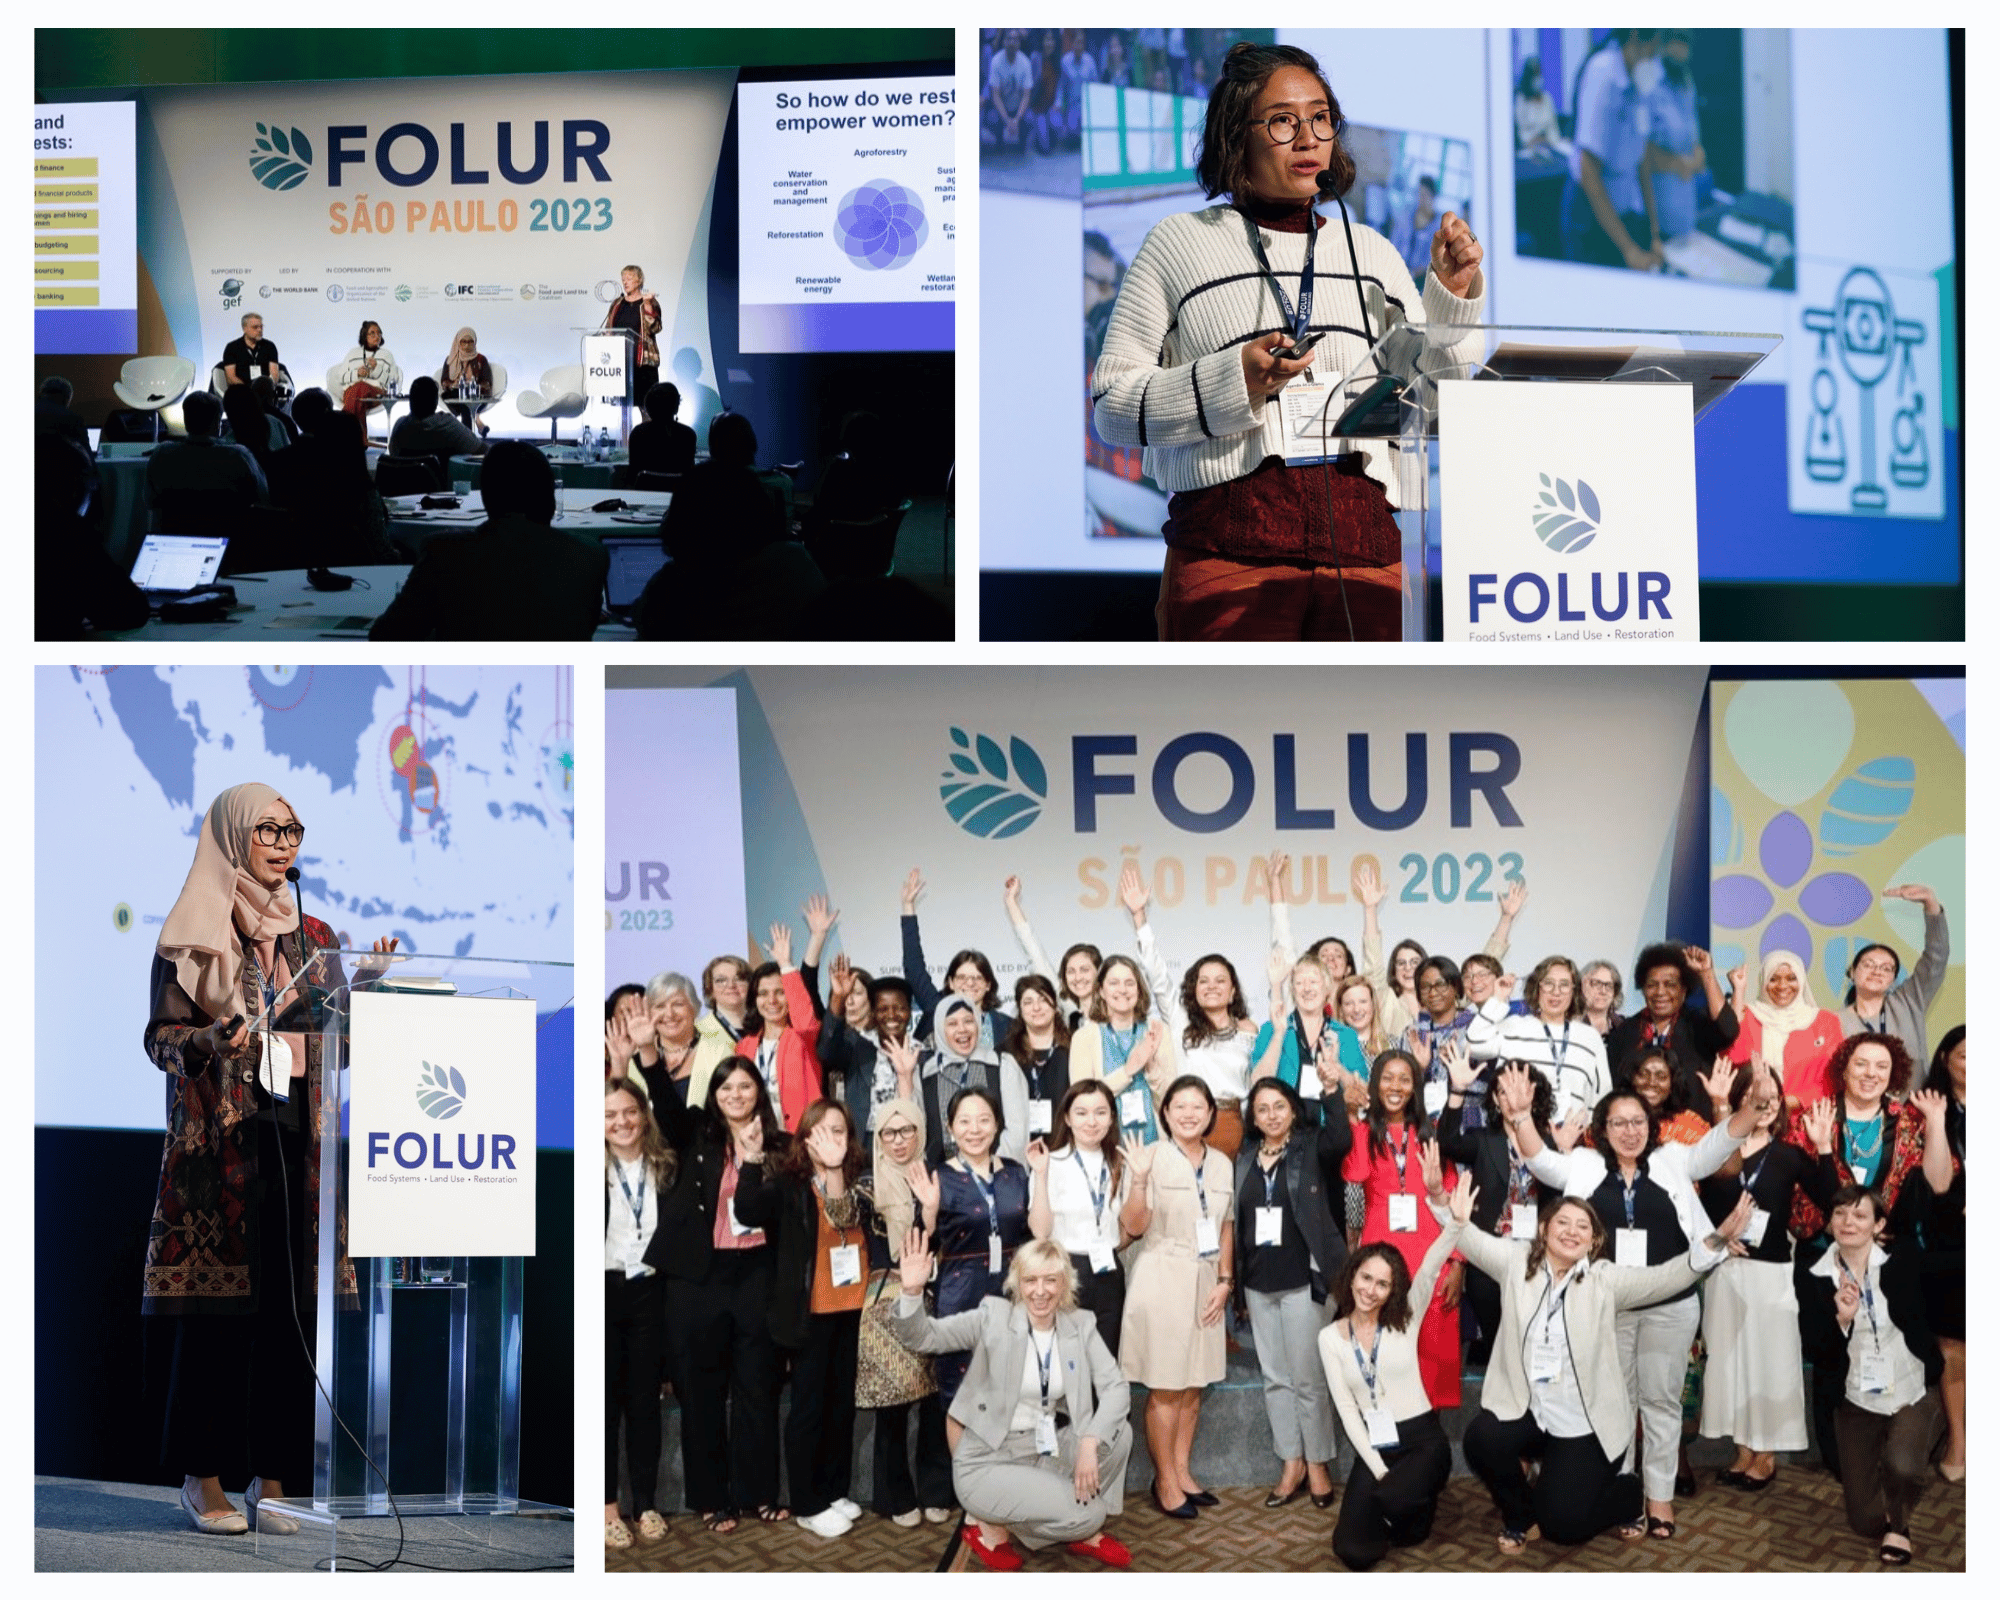 Women participate in the FOLUR Annual Meeting 2023 in Sao Paulo